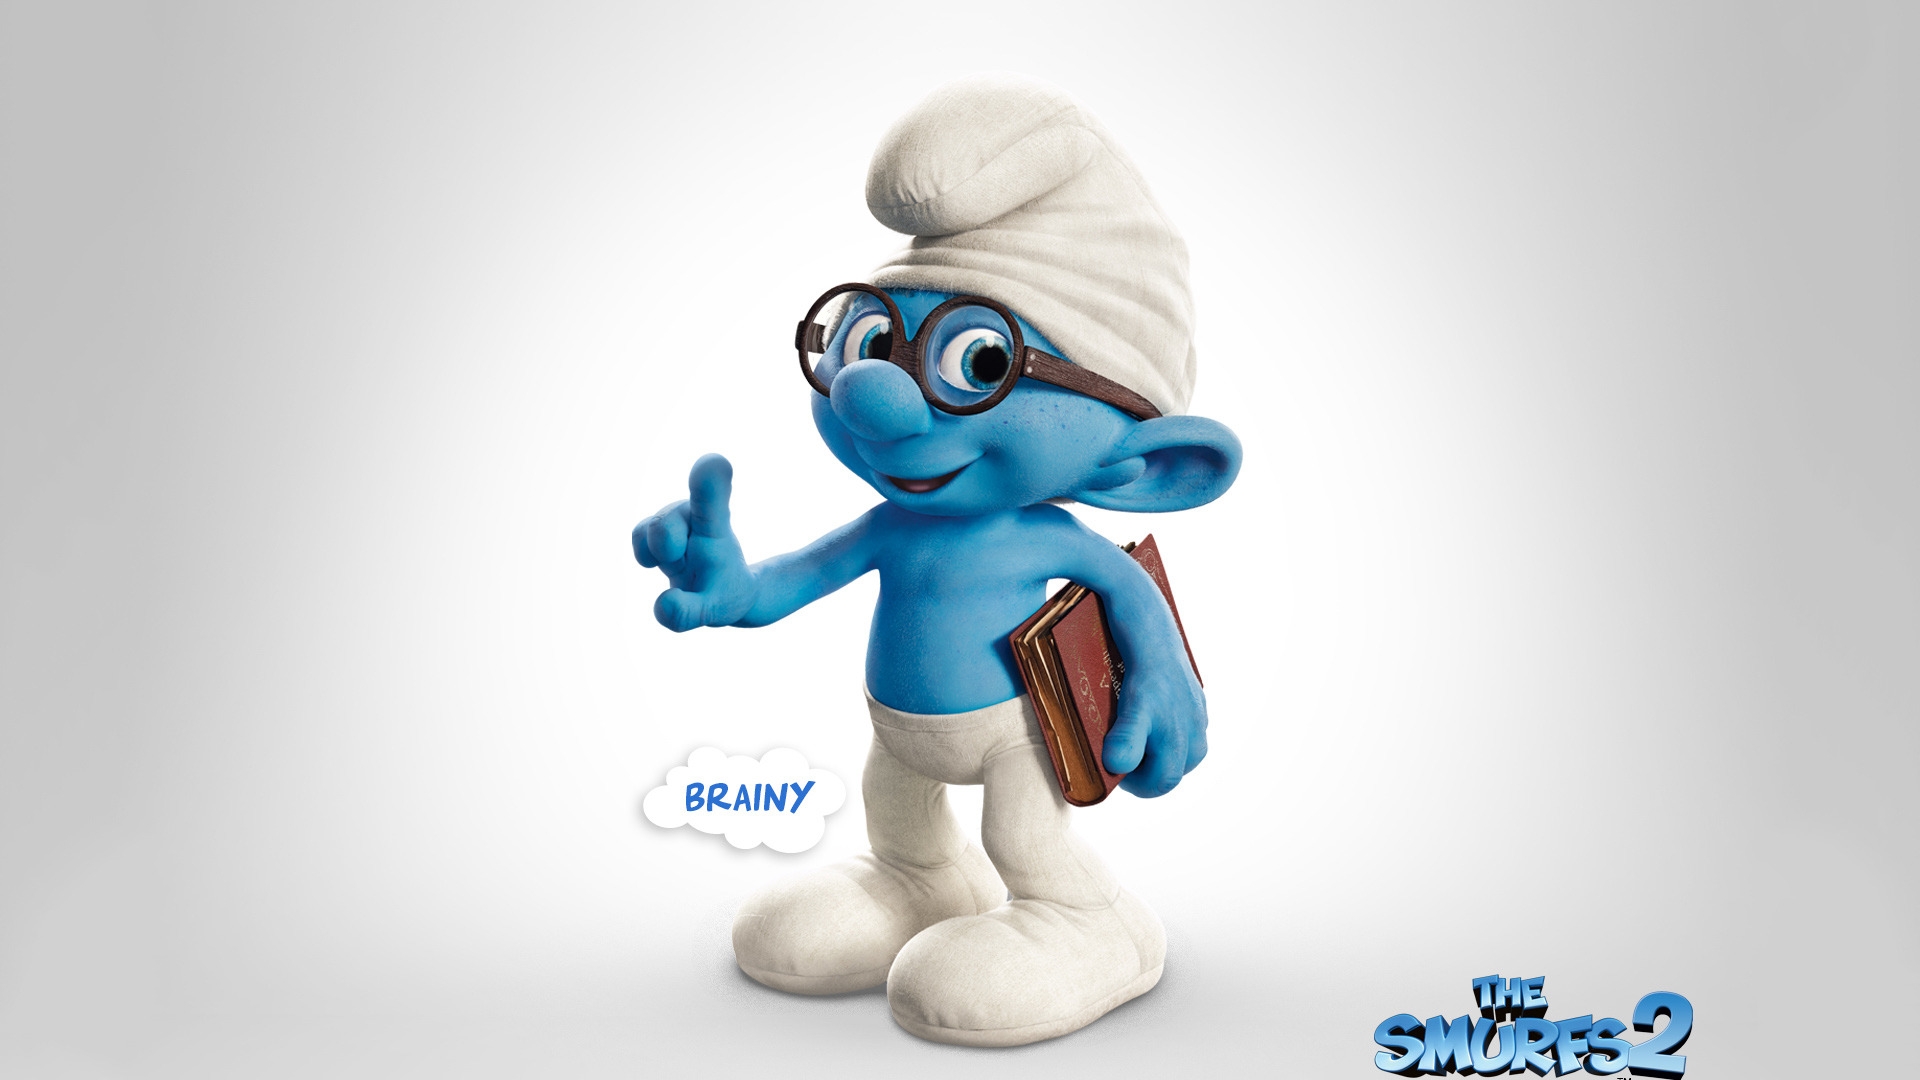 Brainy The Smurfs 2 for 1920 x 1080 HDTV 1080p resolution